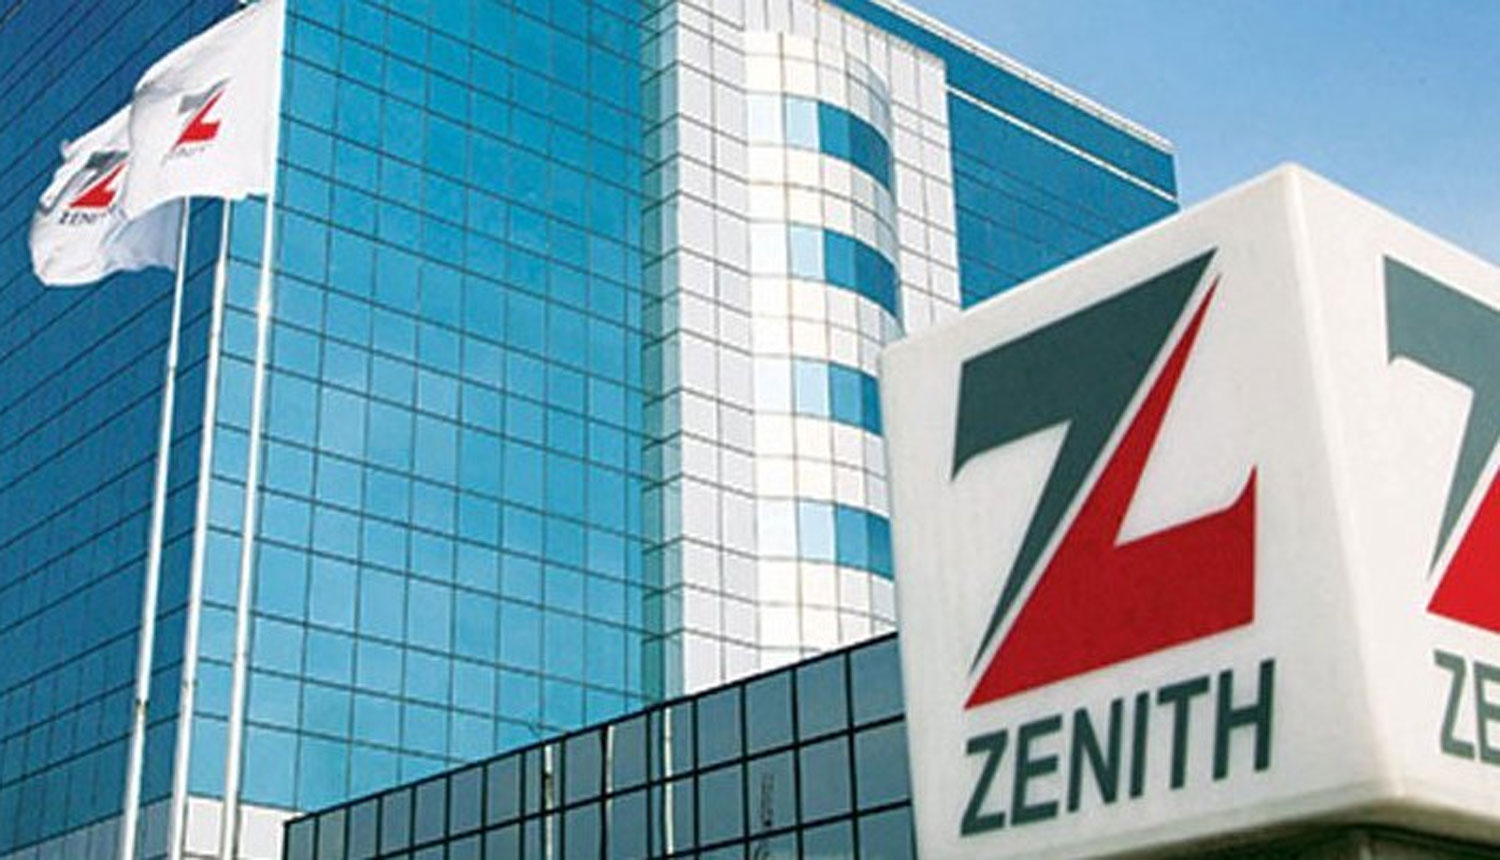 Zenith Bank